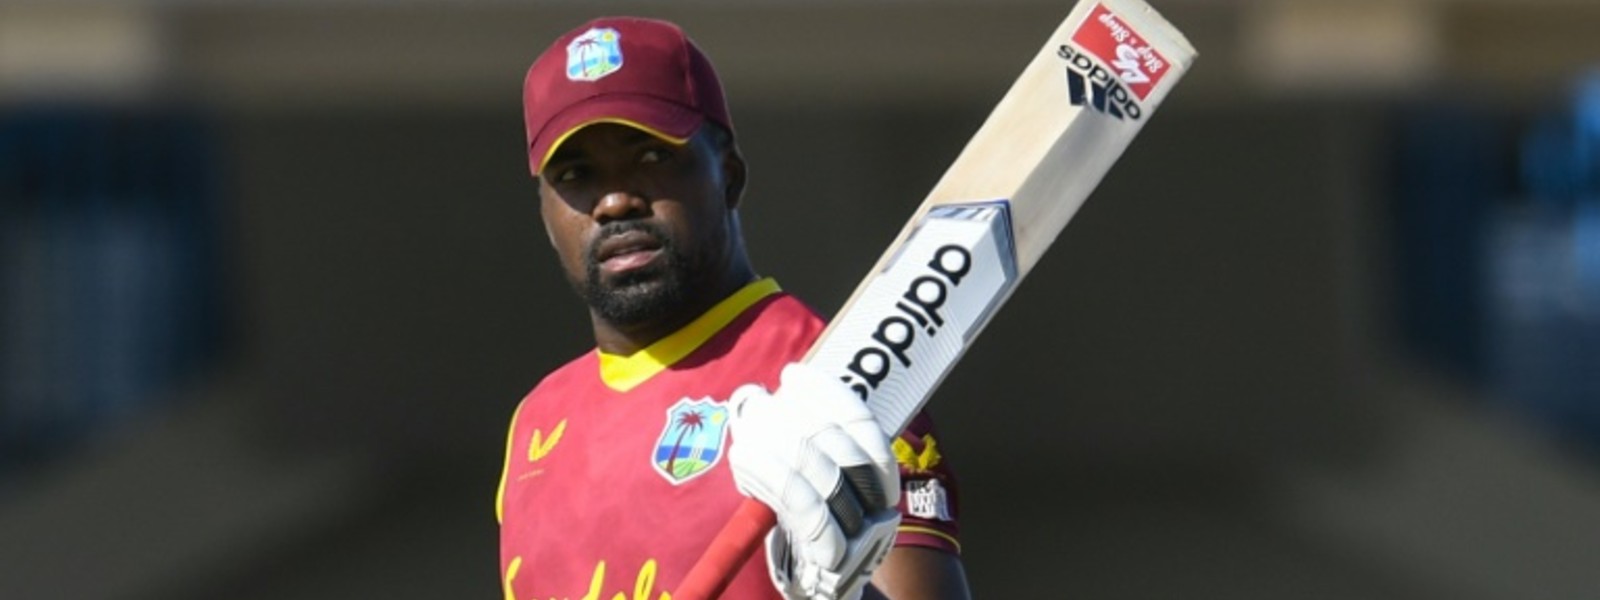 Bravo century steers West Indies to Sri Lanka series sweep